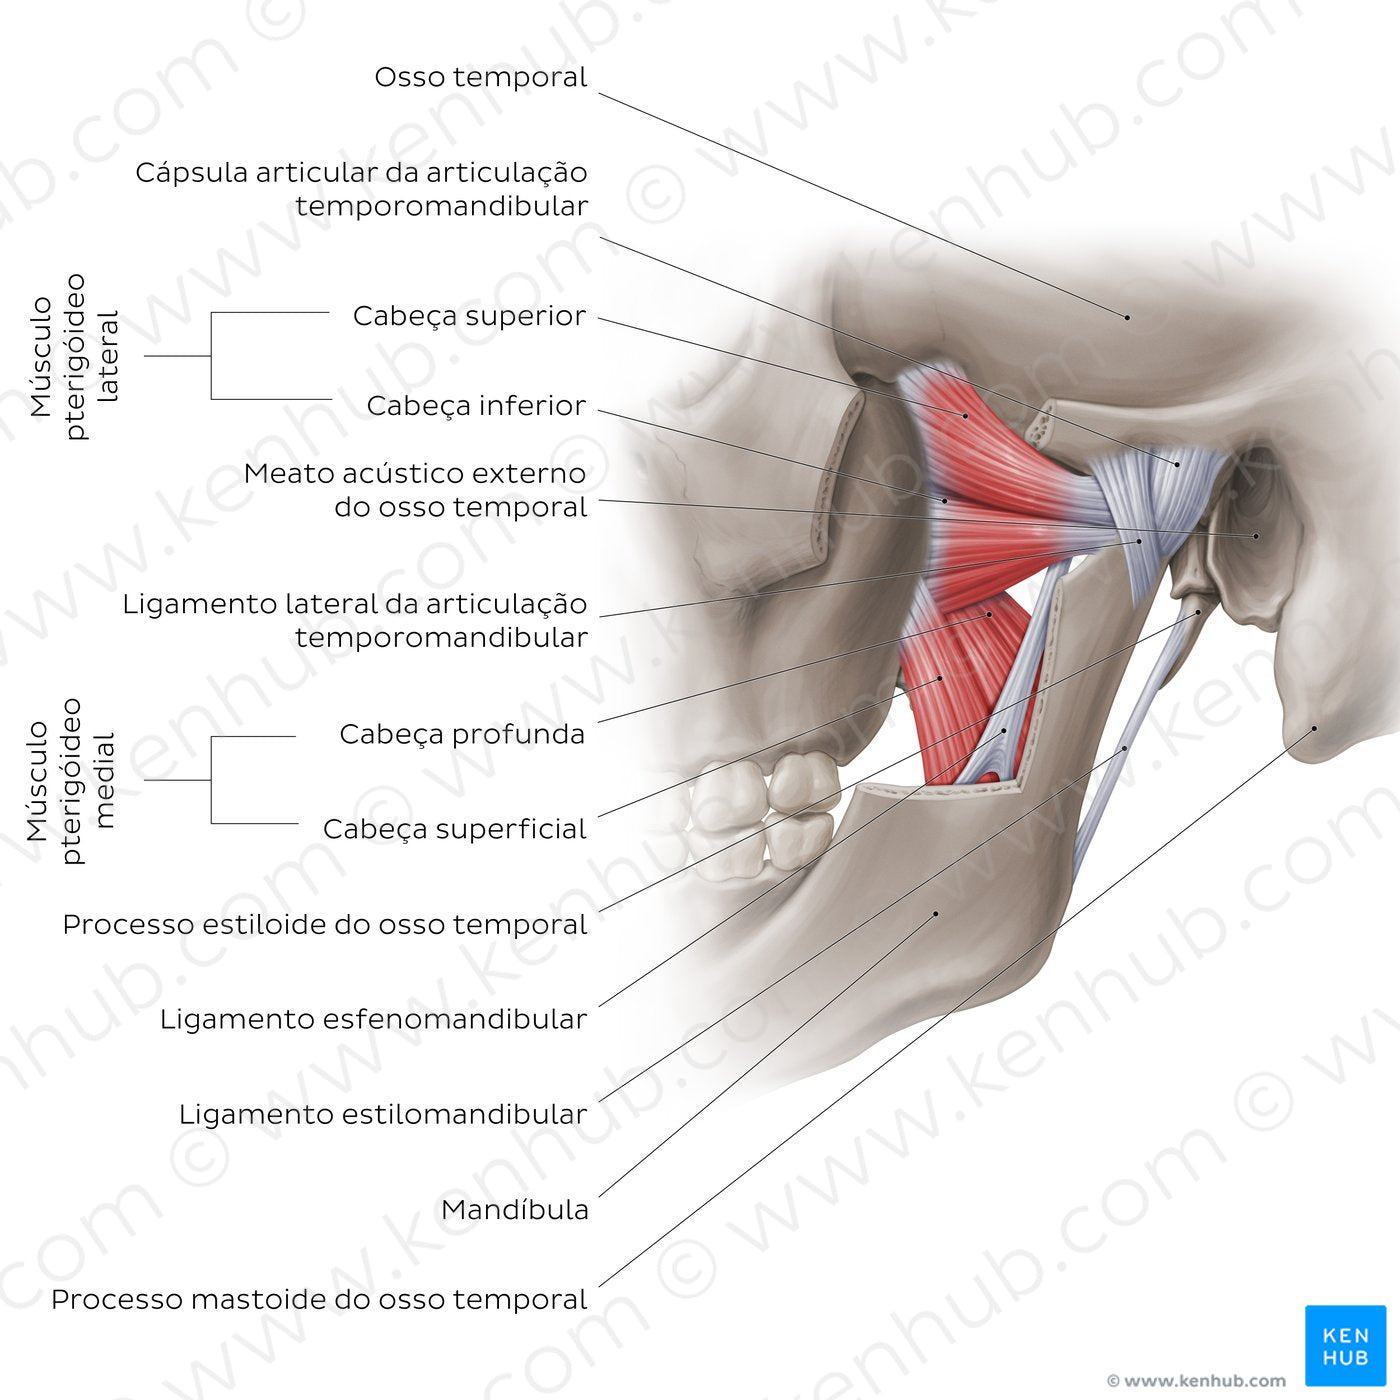 Temporomandibular joint: overview (Portuguese)